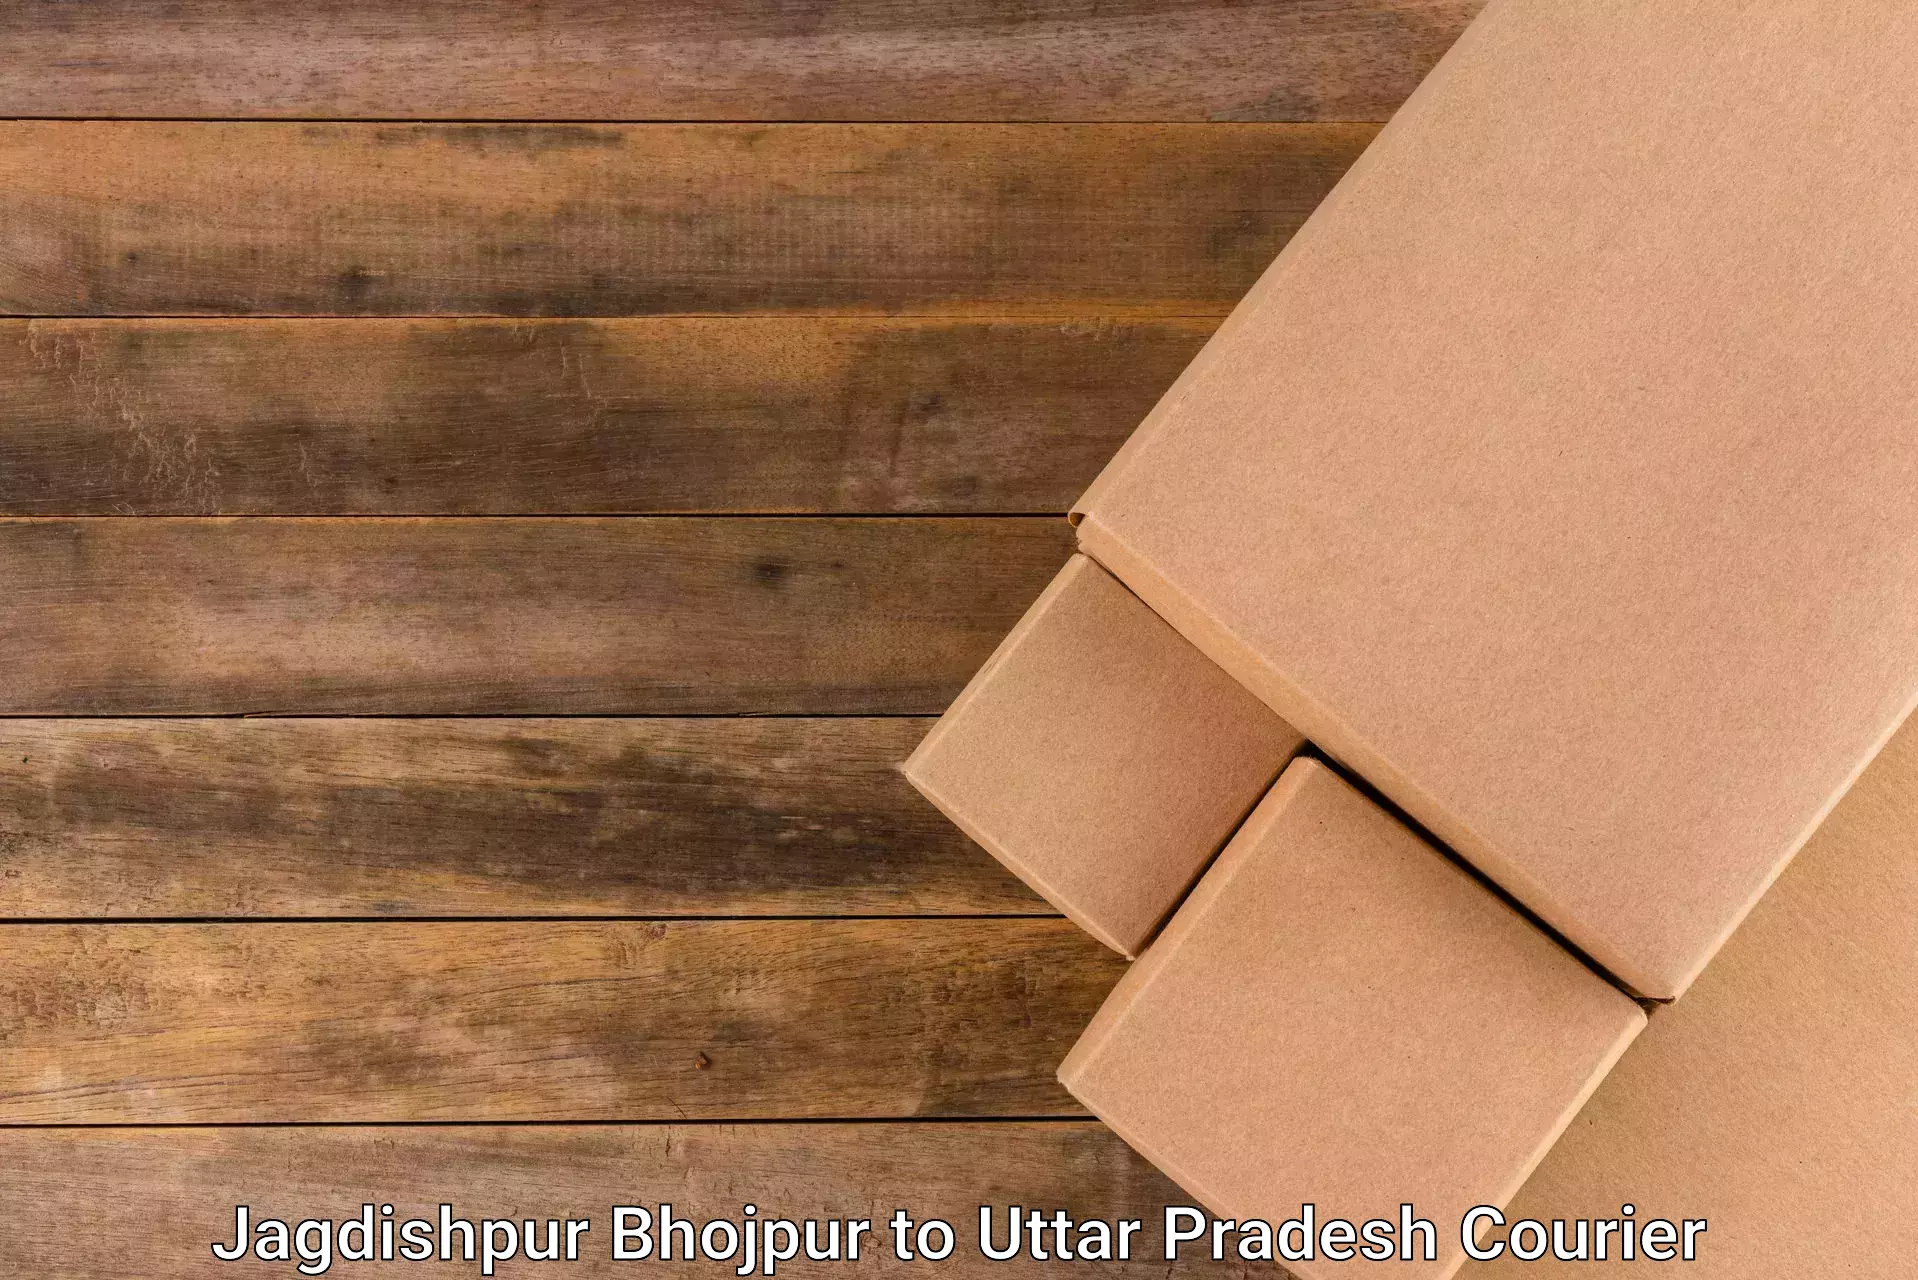 Efficient order fulfillment Jagdishpur Bhojpur to Uttar Pradesh